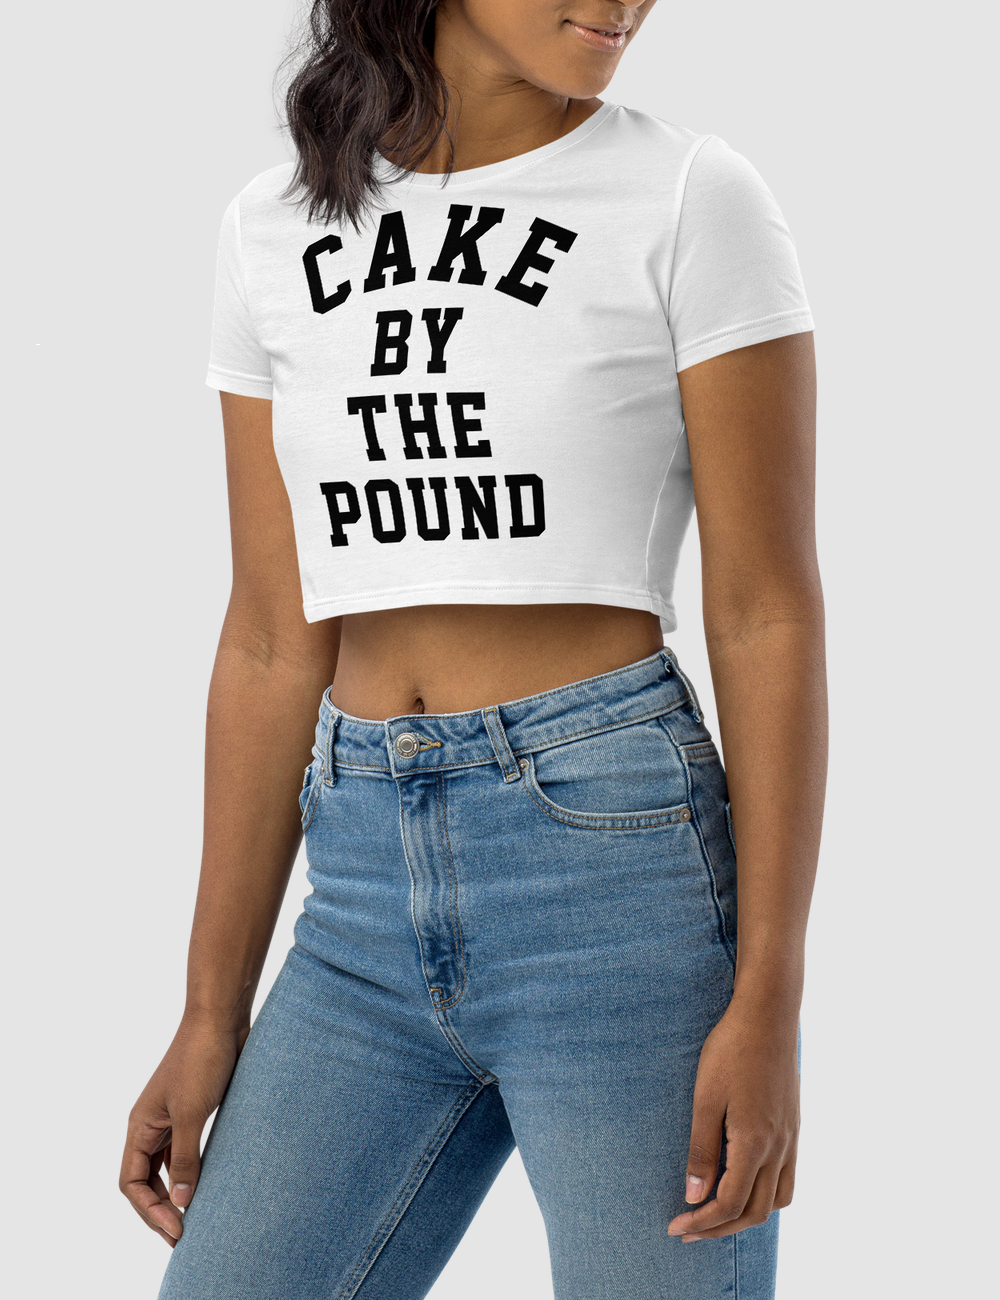 Cake By The Pound | Women's Crop Top T-Shirt OniTakai